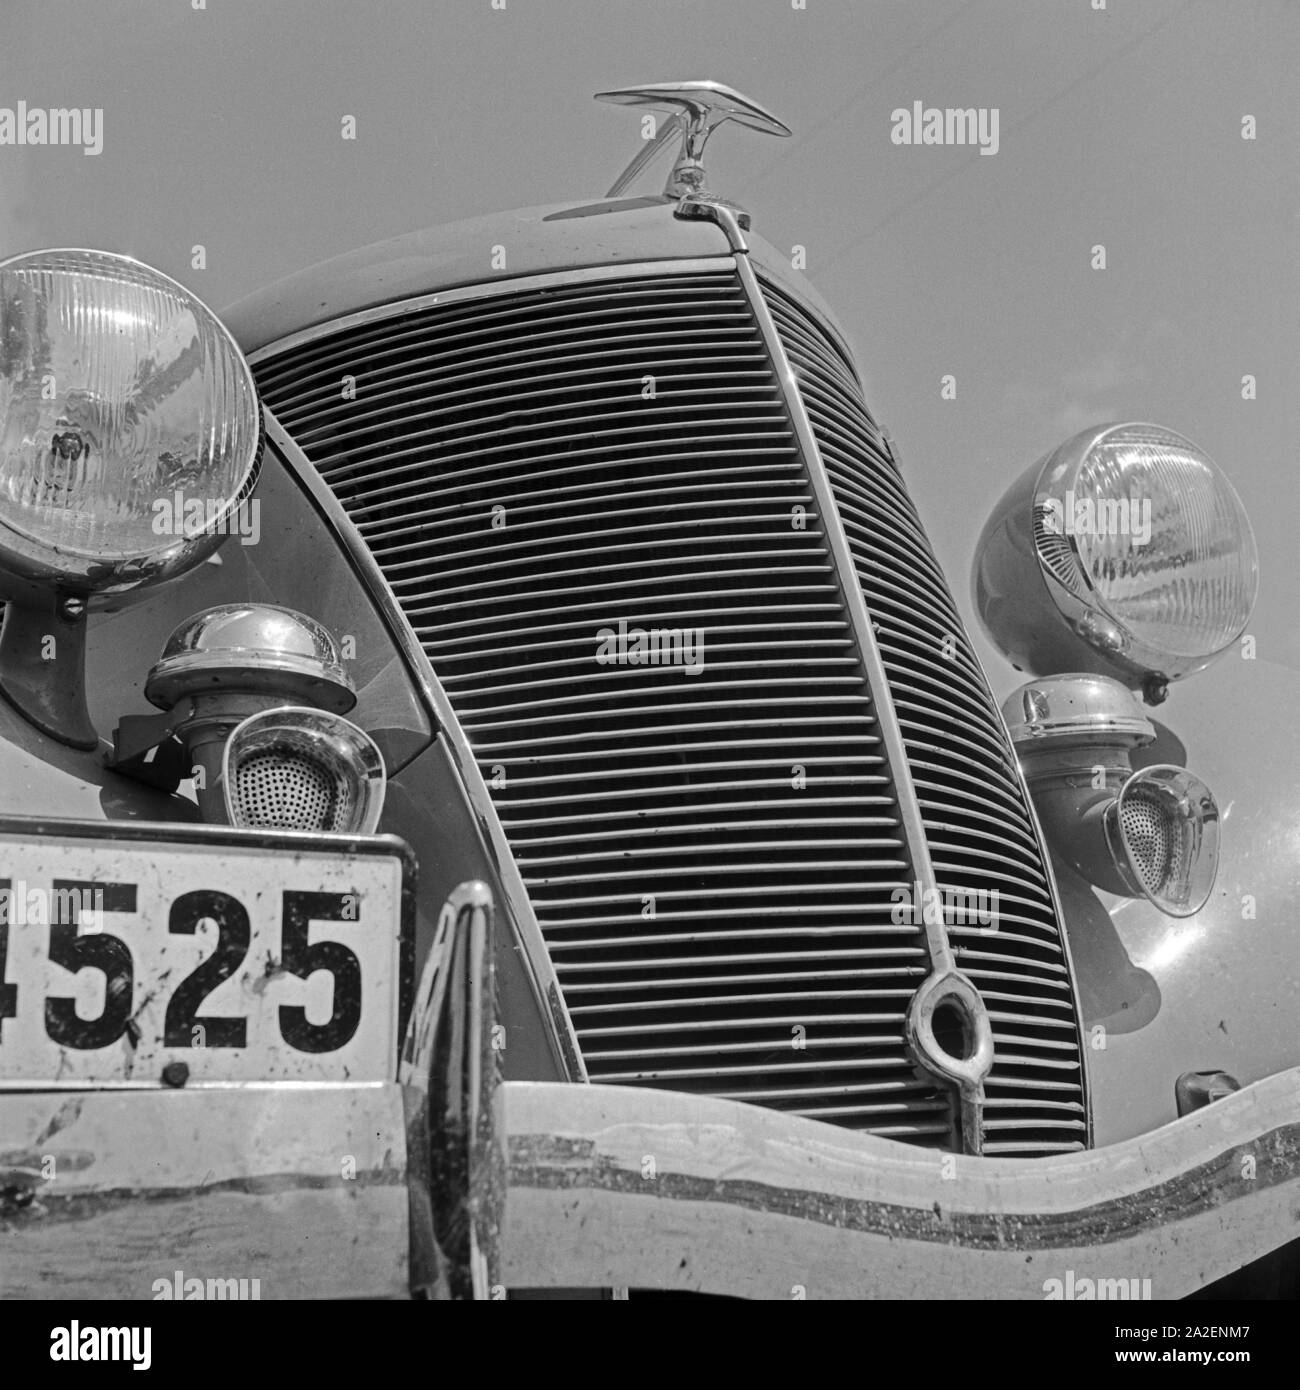 Car radiator grill Schwarzweiß-Stockfotos und -bilder - Alamy